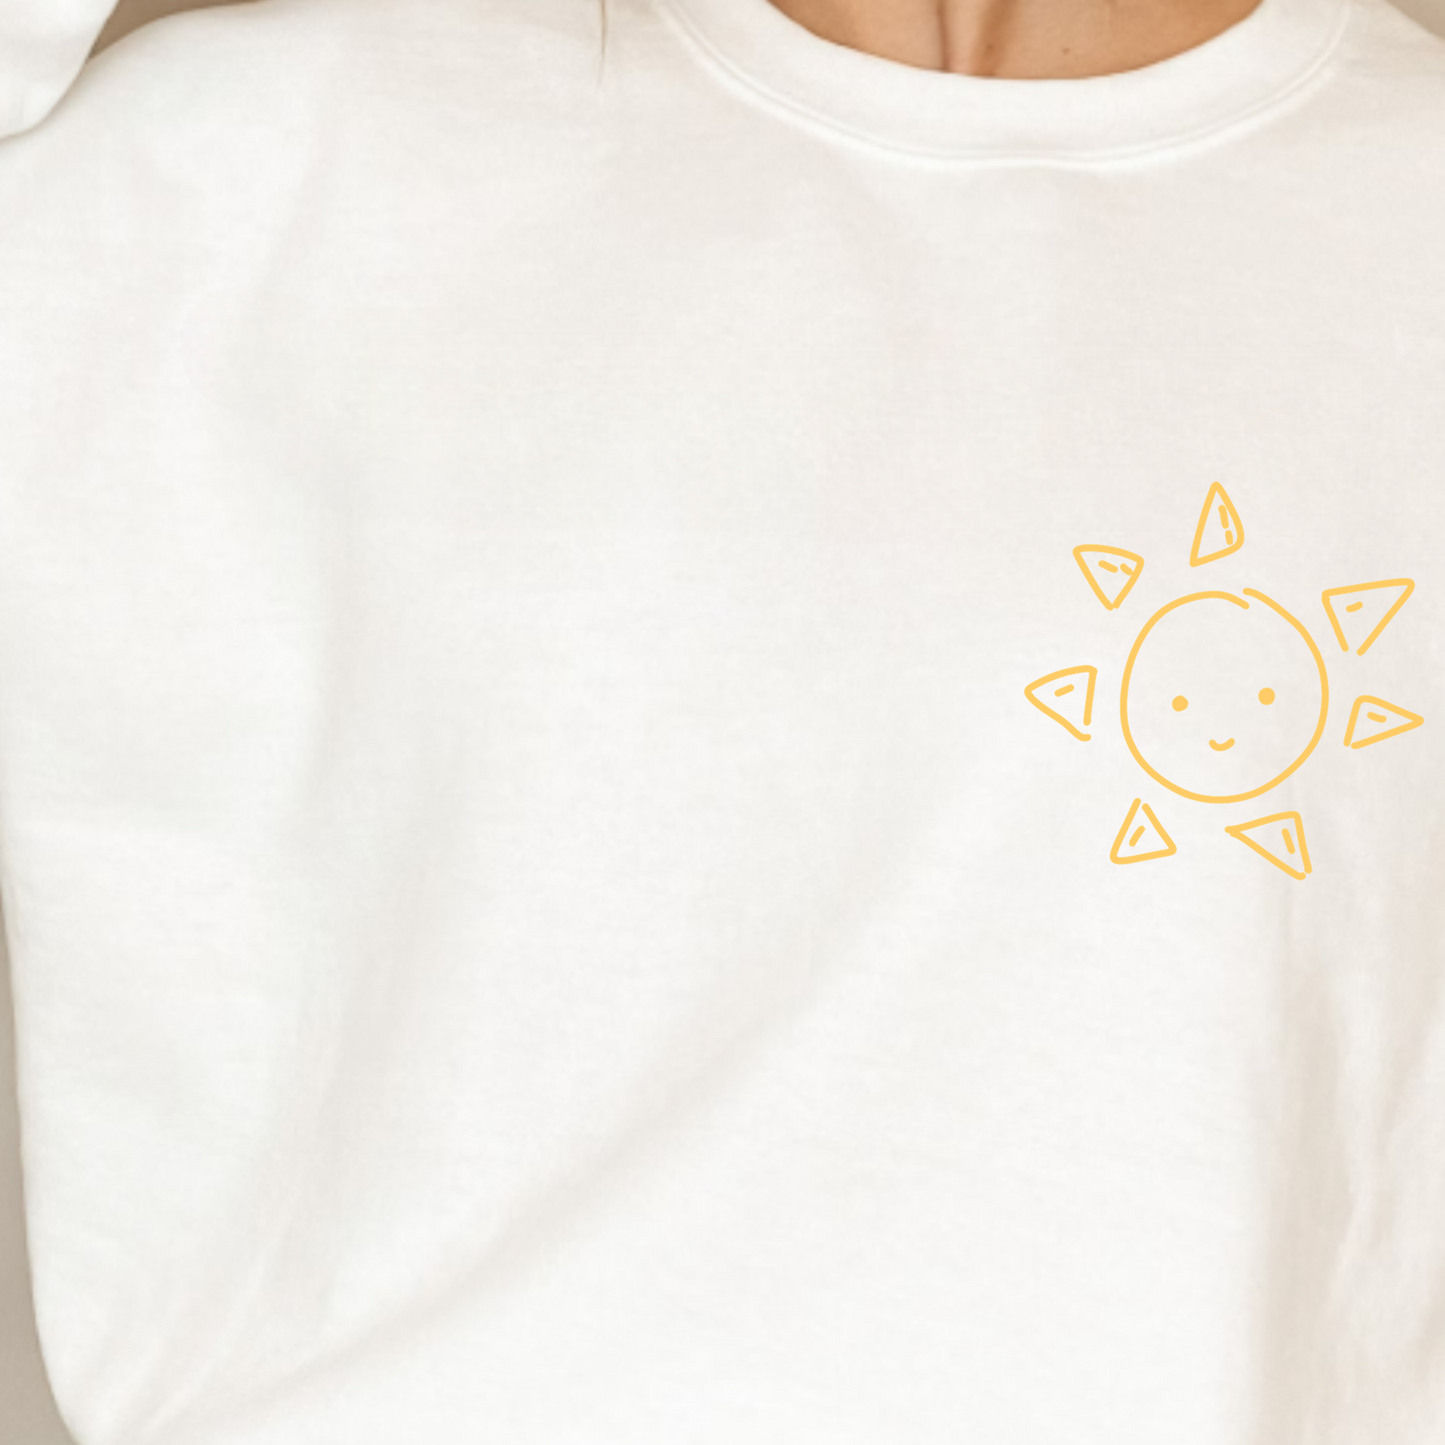 (Shirt not included) Sunshine POCKET -  Matte Clear Film Transfer